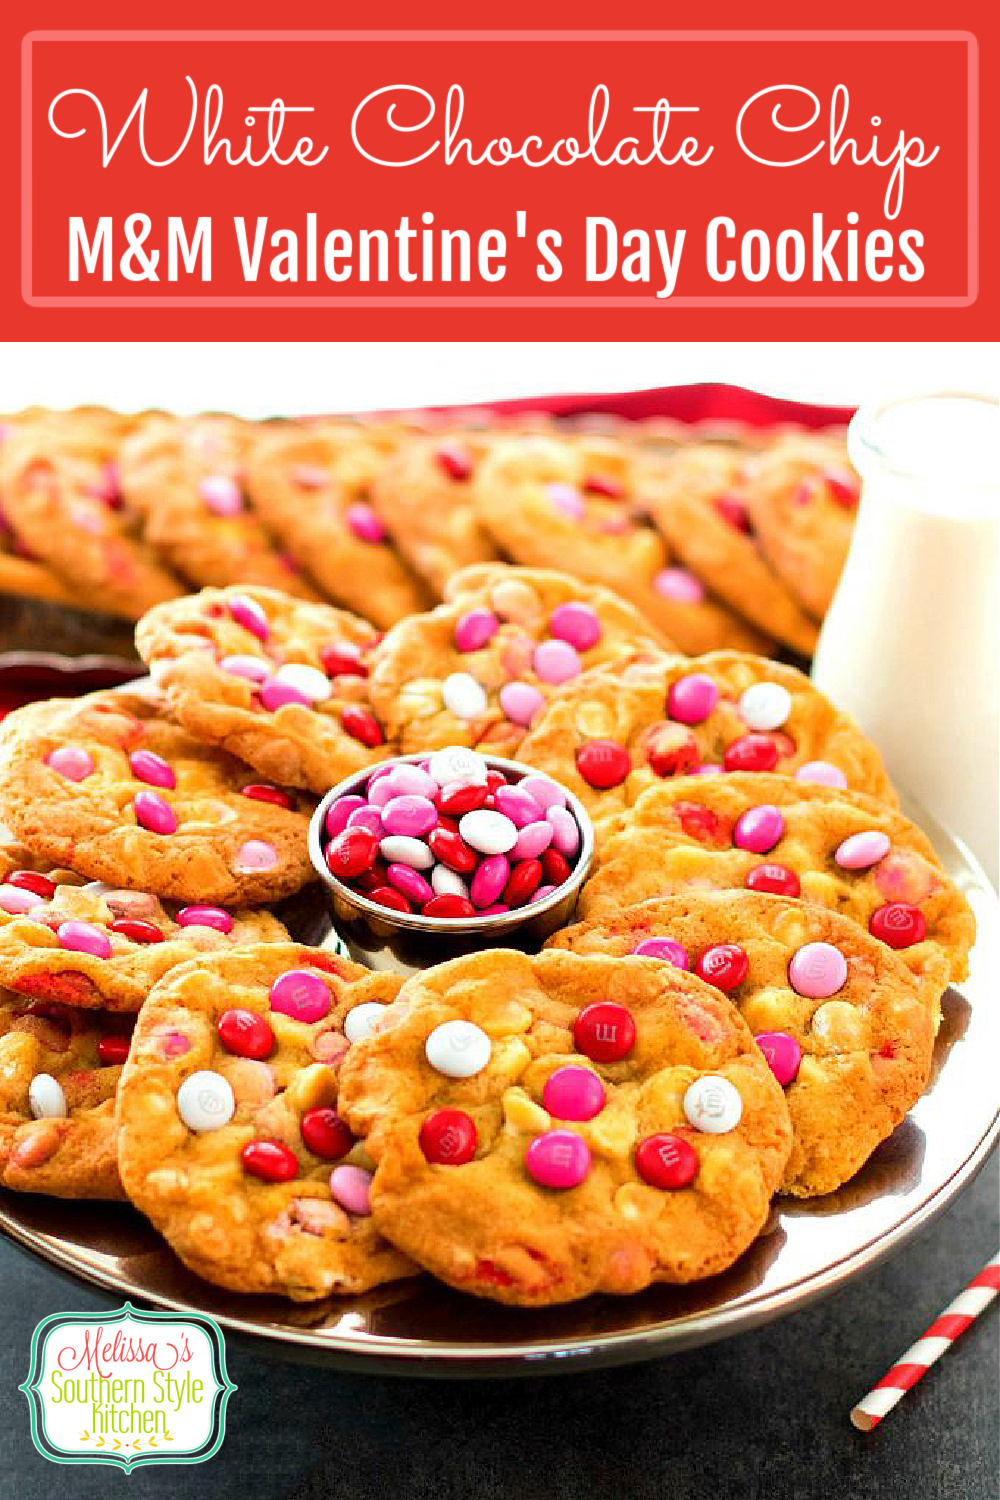 Bake something yummy for your sweetie this Valentine's Day #whitechocolatechipcookies #m&ms #vanetinesdaydesserts #cookierecipes #holidaybaking #whitechocolate #cookierecipes #southernrecipes